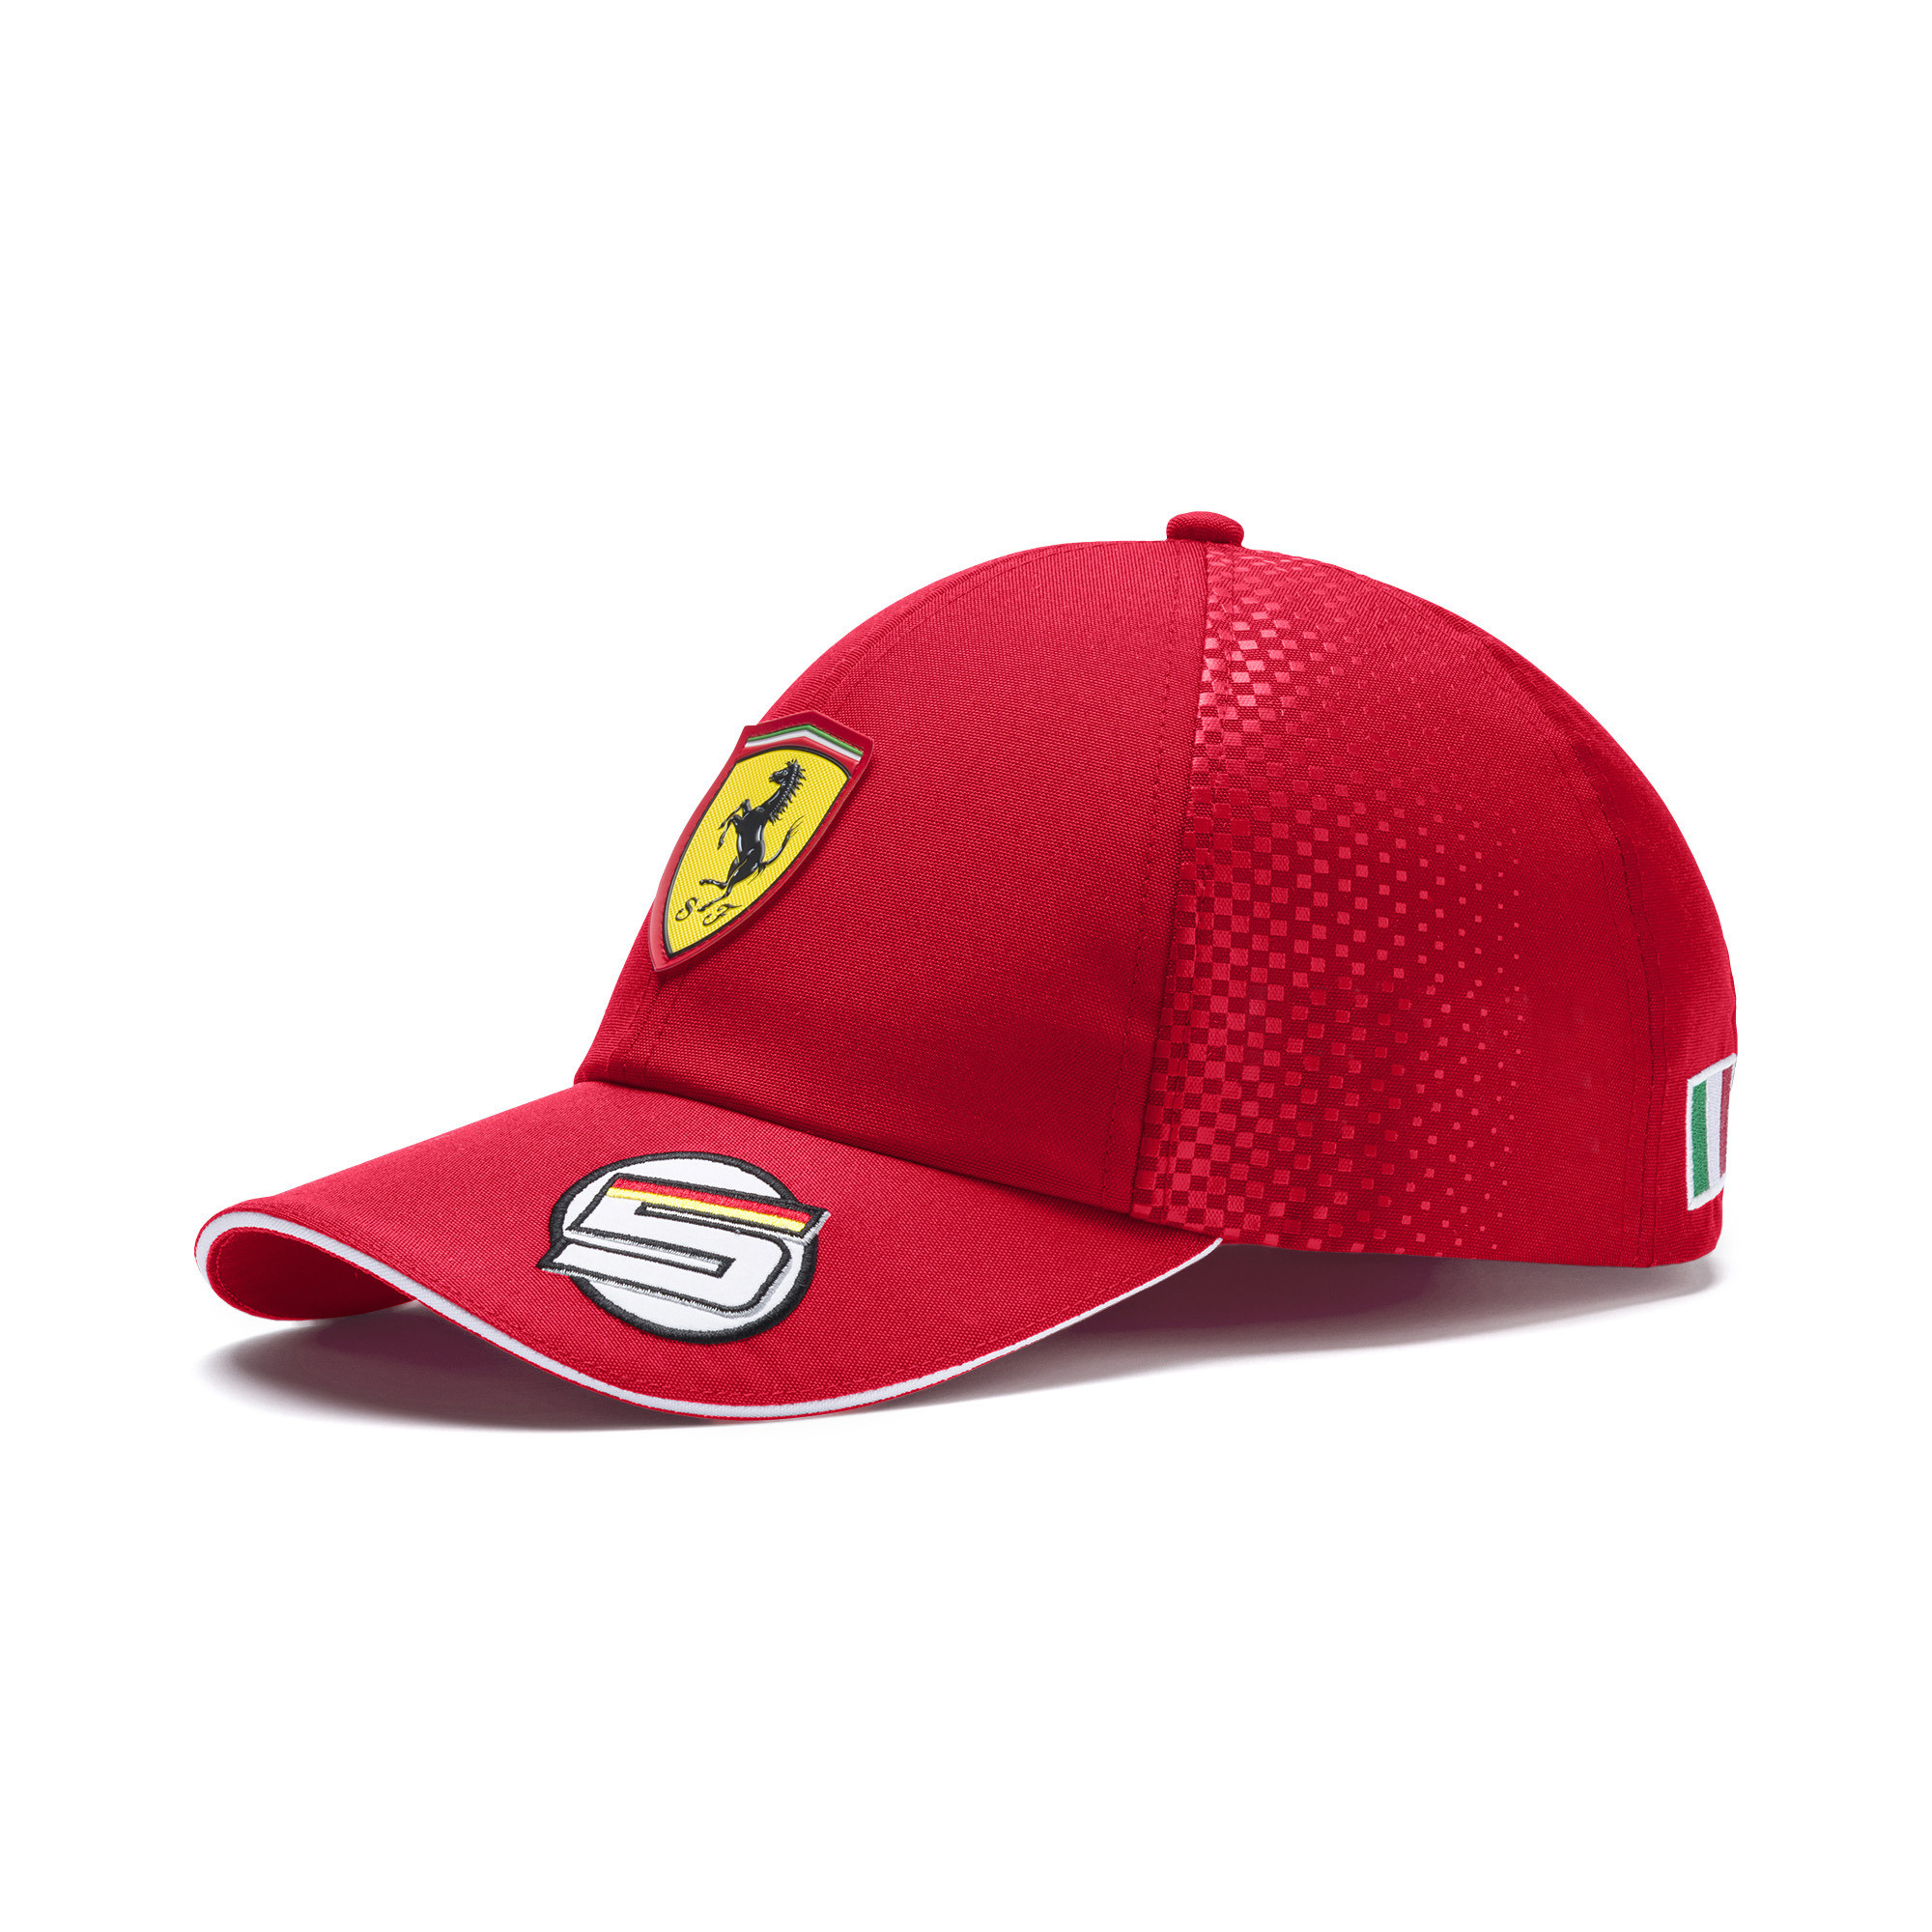 Oficial 2019 Sebastian Vettel F1 Gorra De Béisbol Sombrero adultos tamaño Scuderia Ferrari 